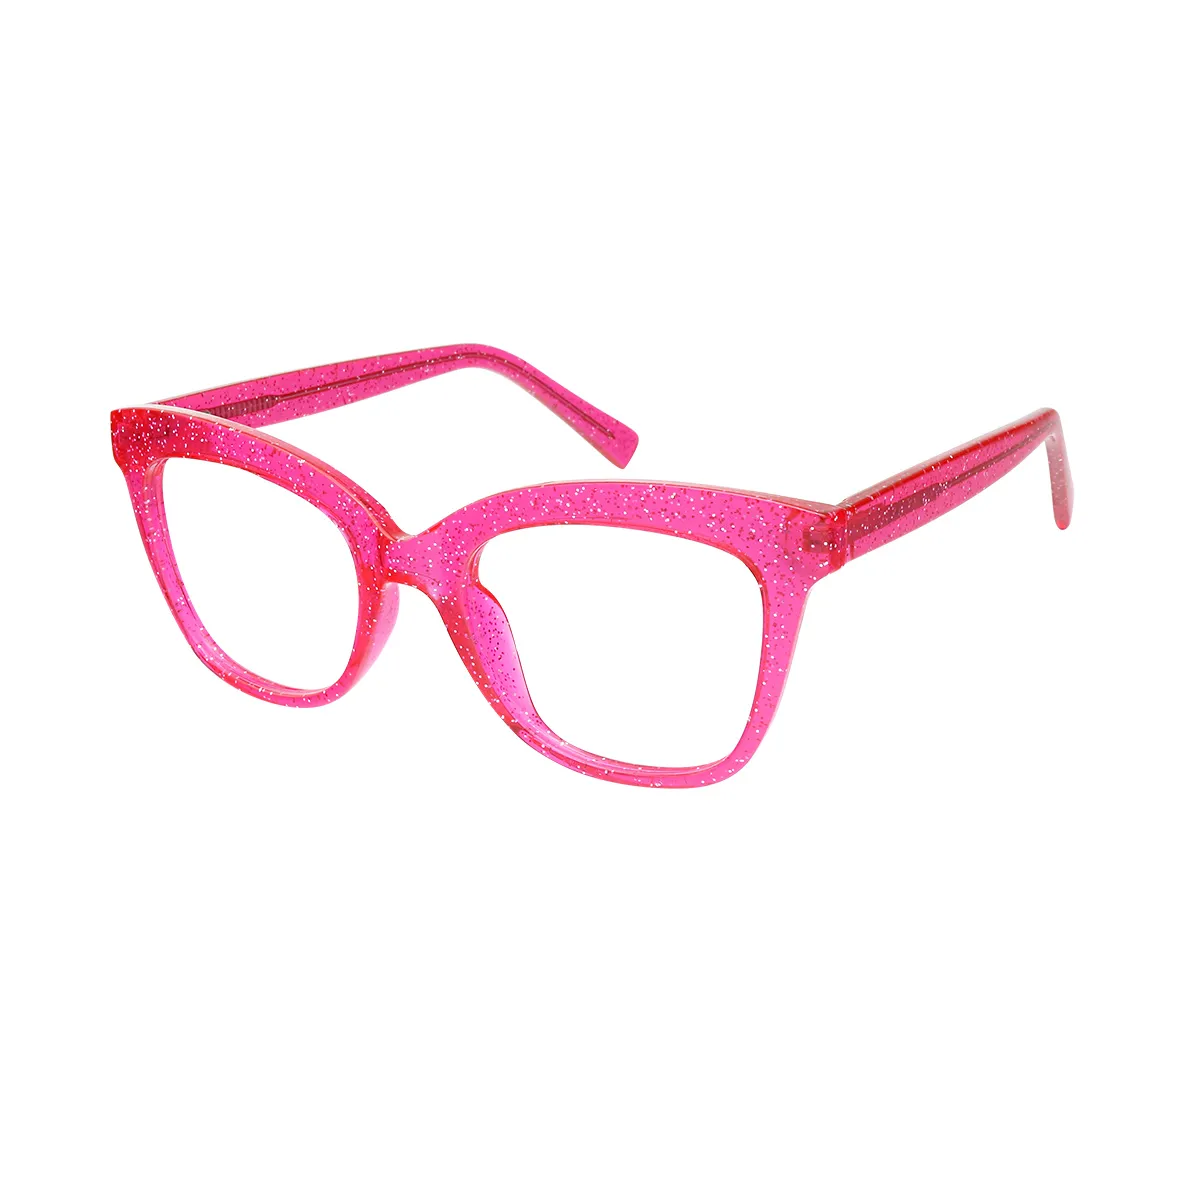 Blocks - Square Pink-Sparkle Glasses for Women - EFE